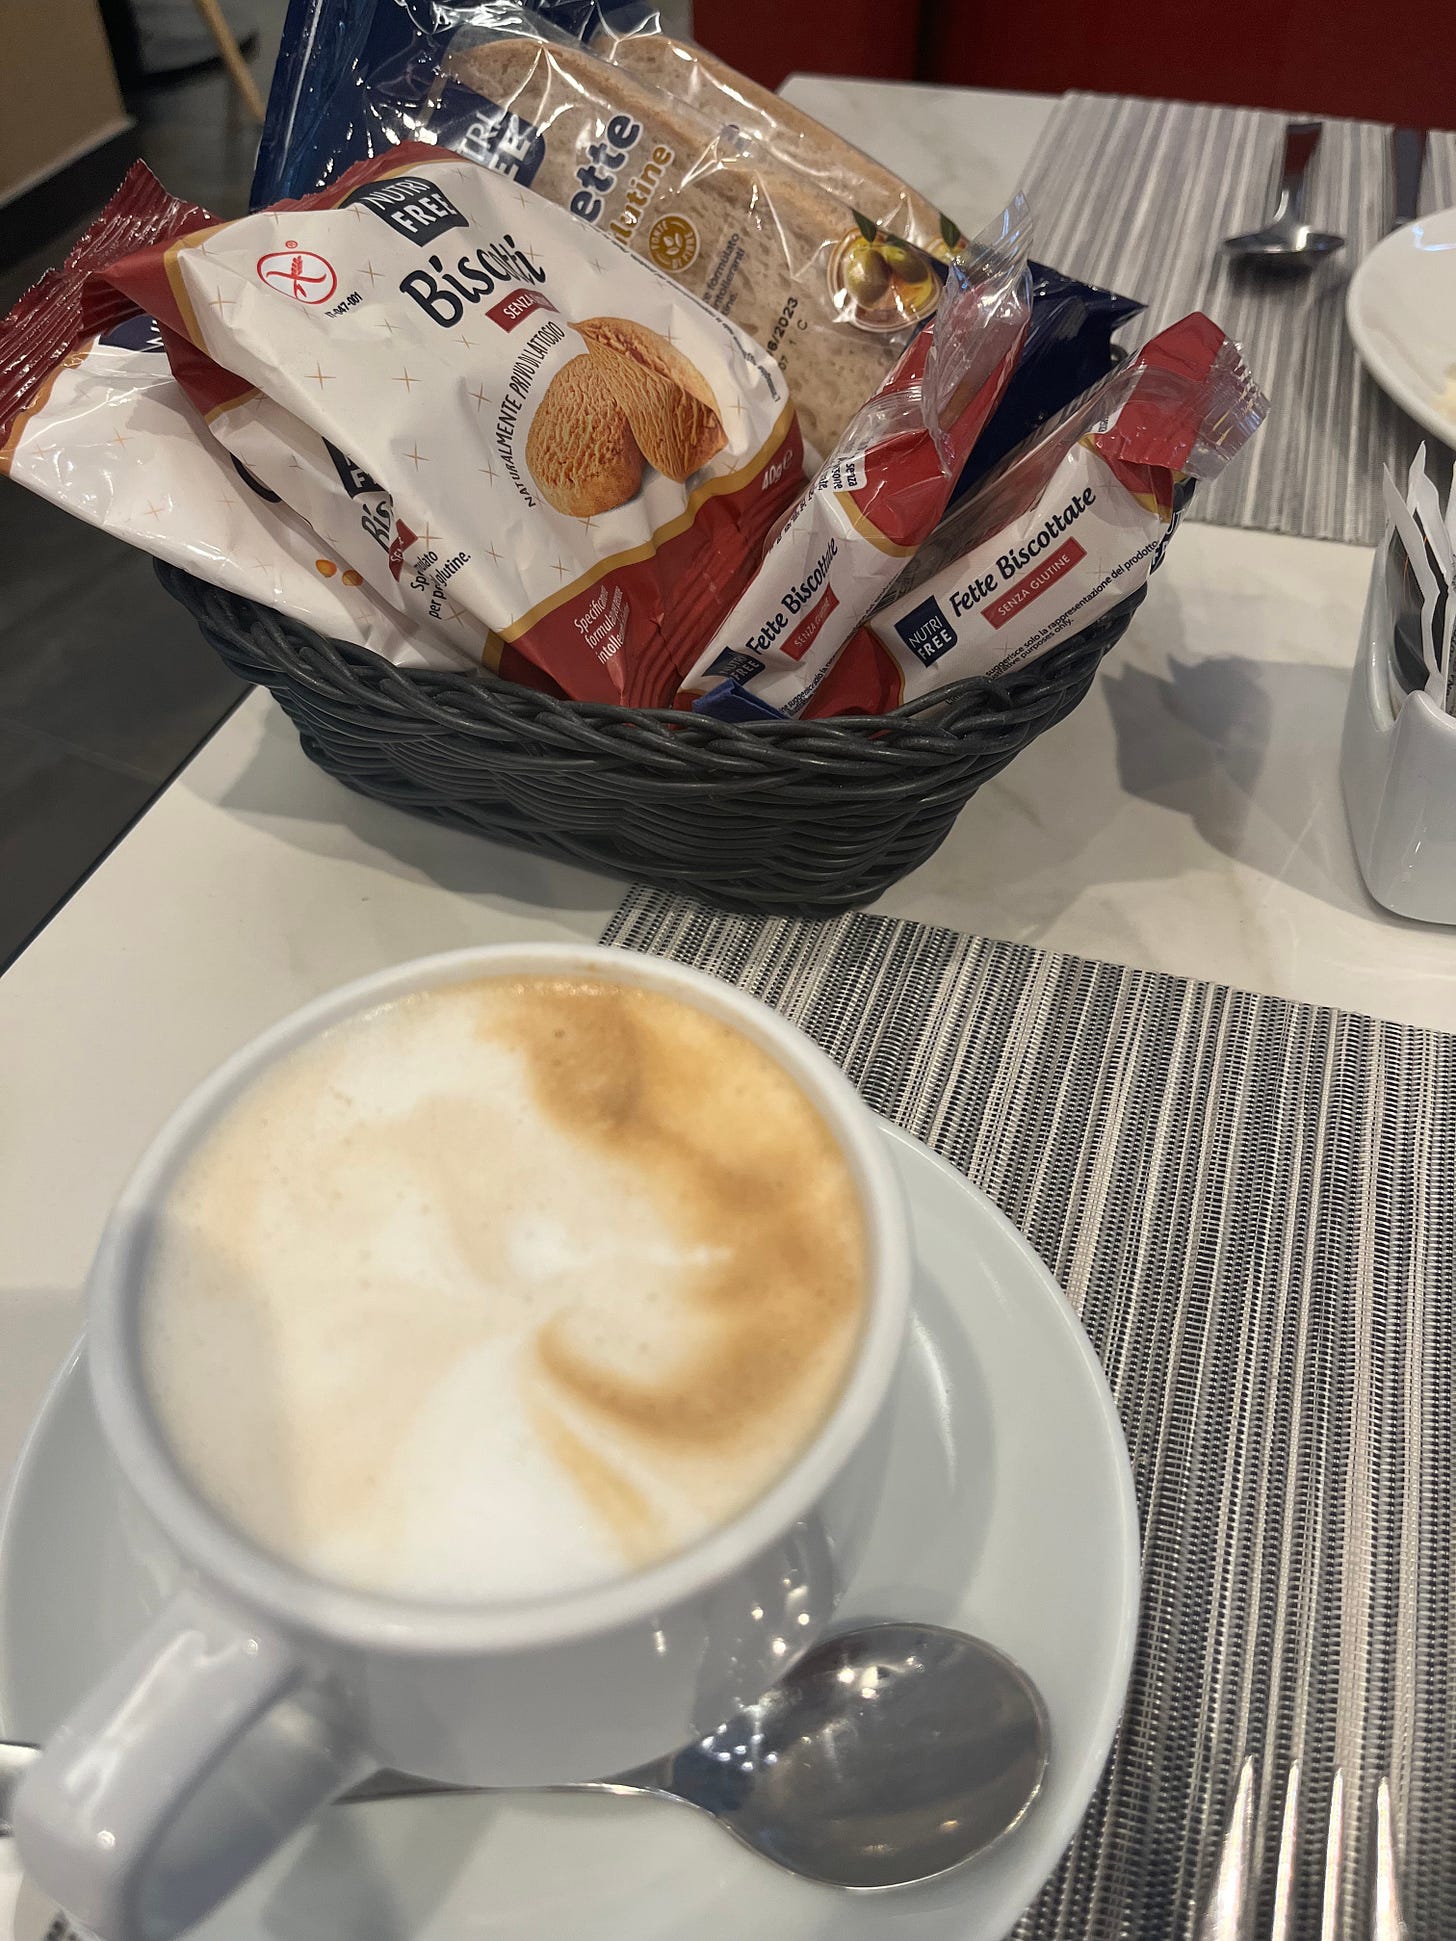 cappuccino and gluten-free bread basket